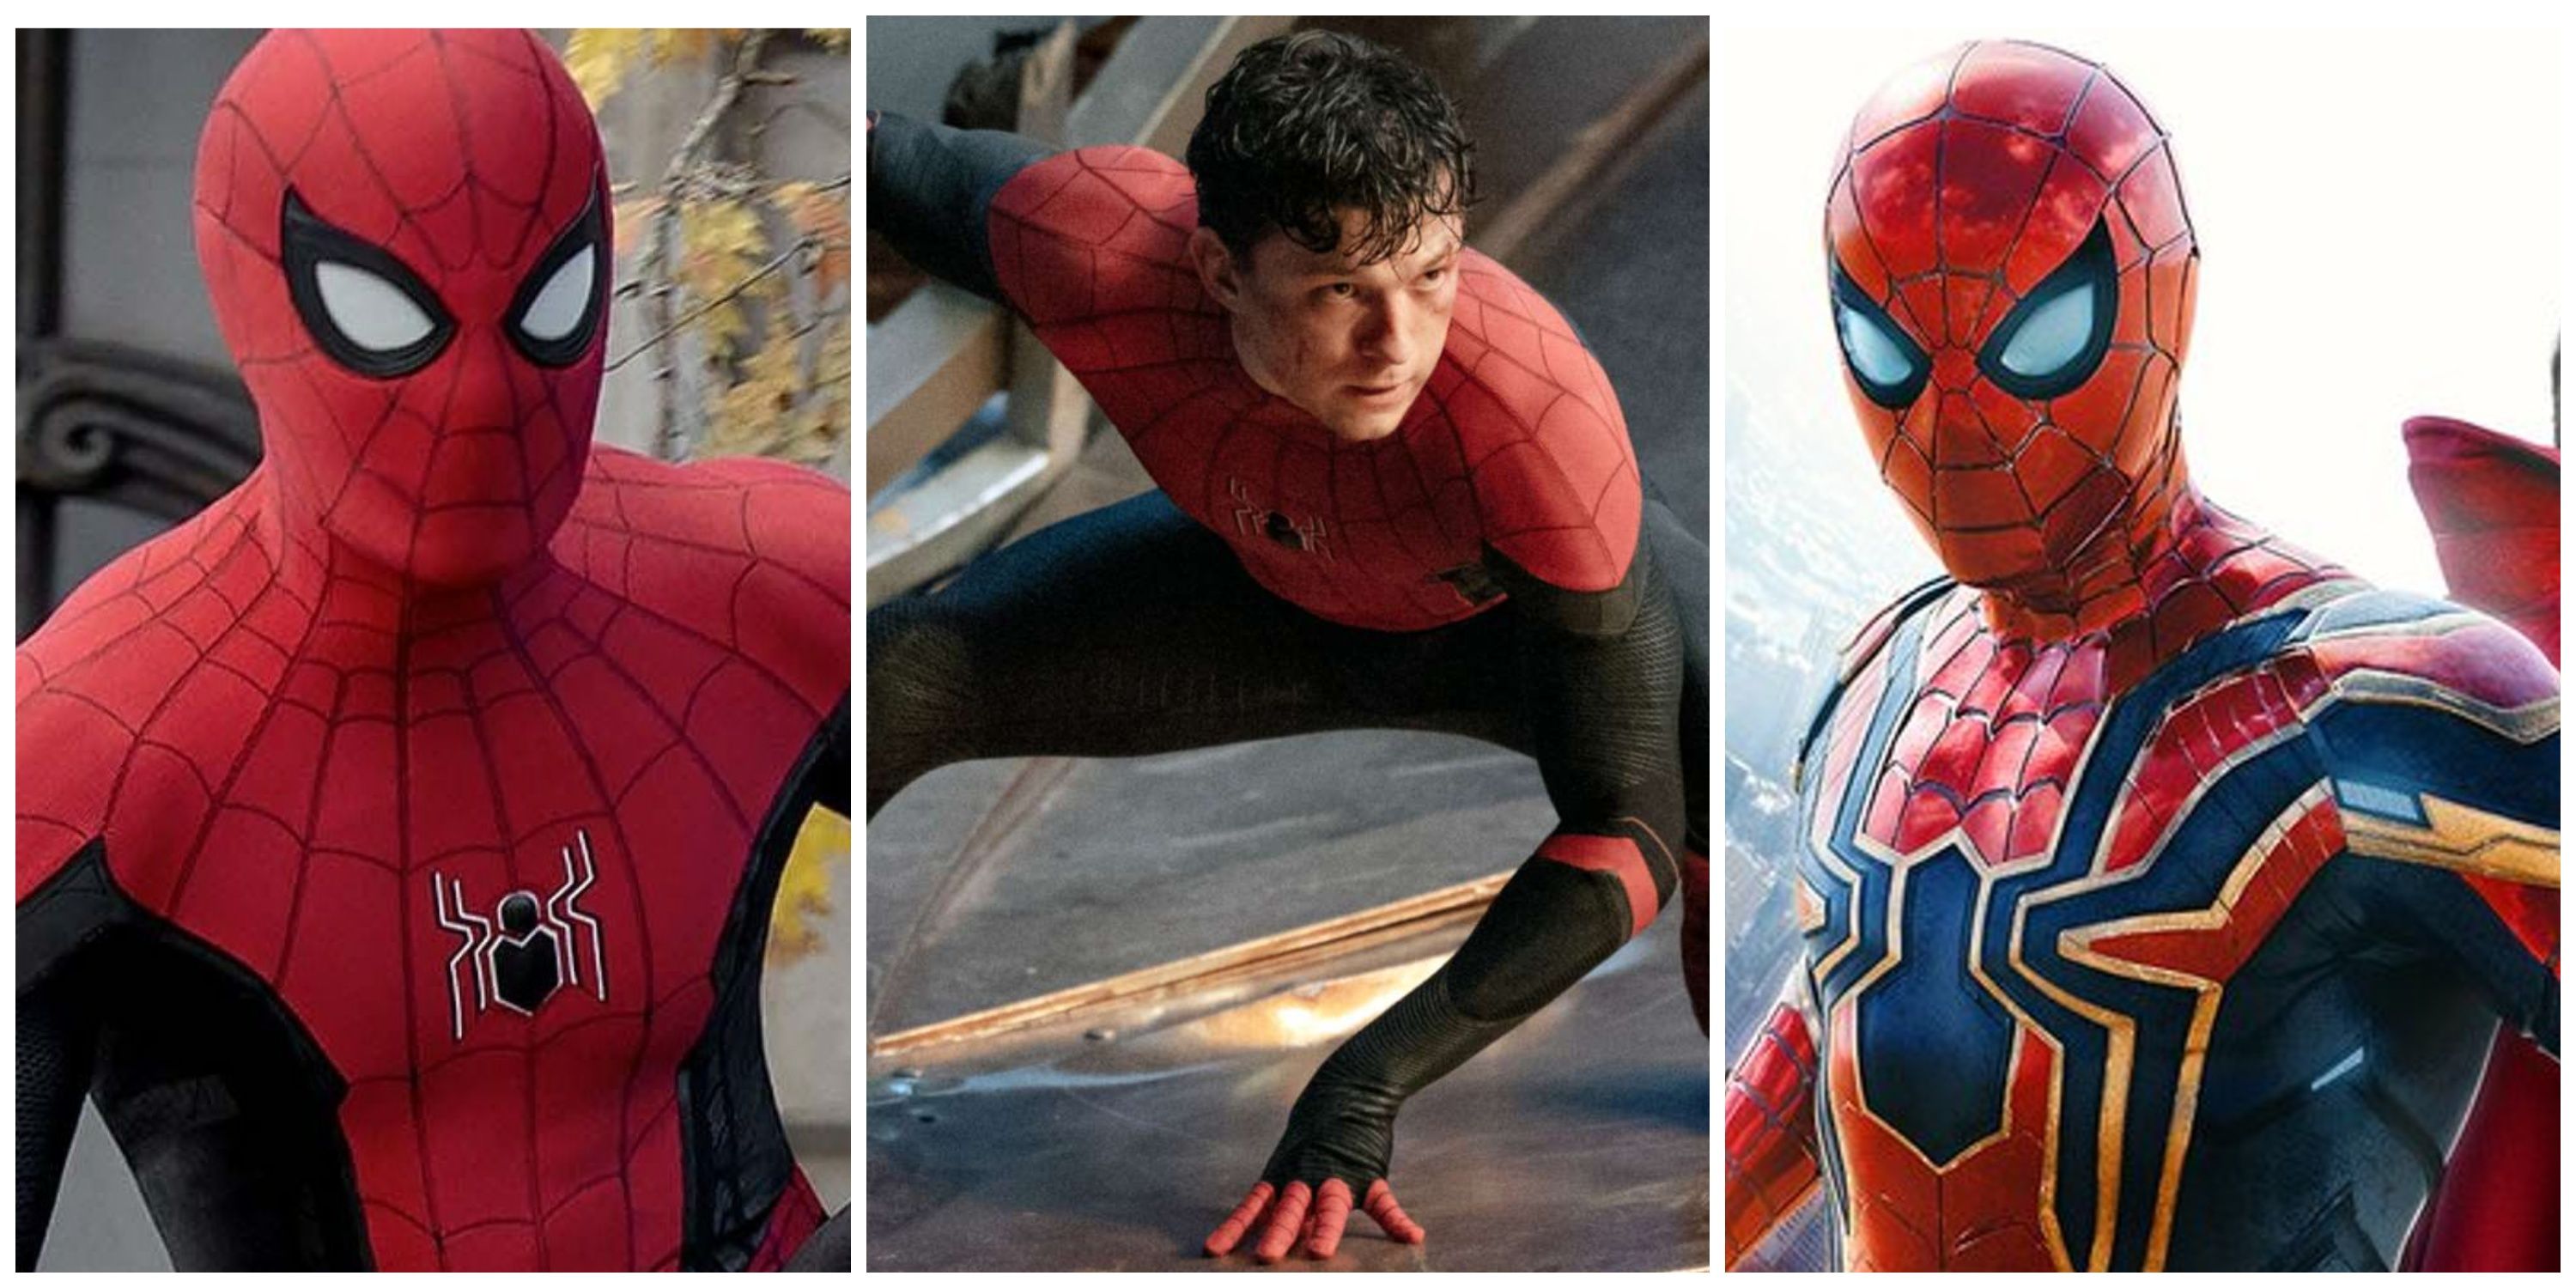 Tom Holland as Peter Parker/Spiderman